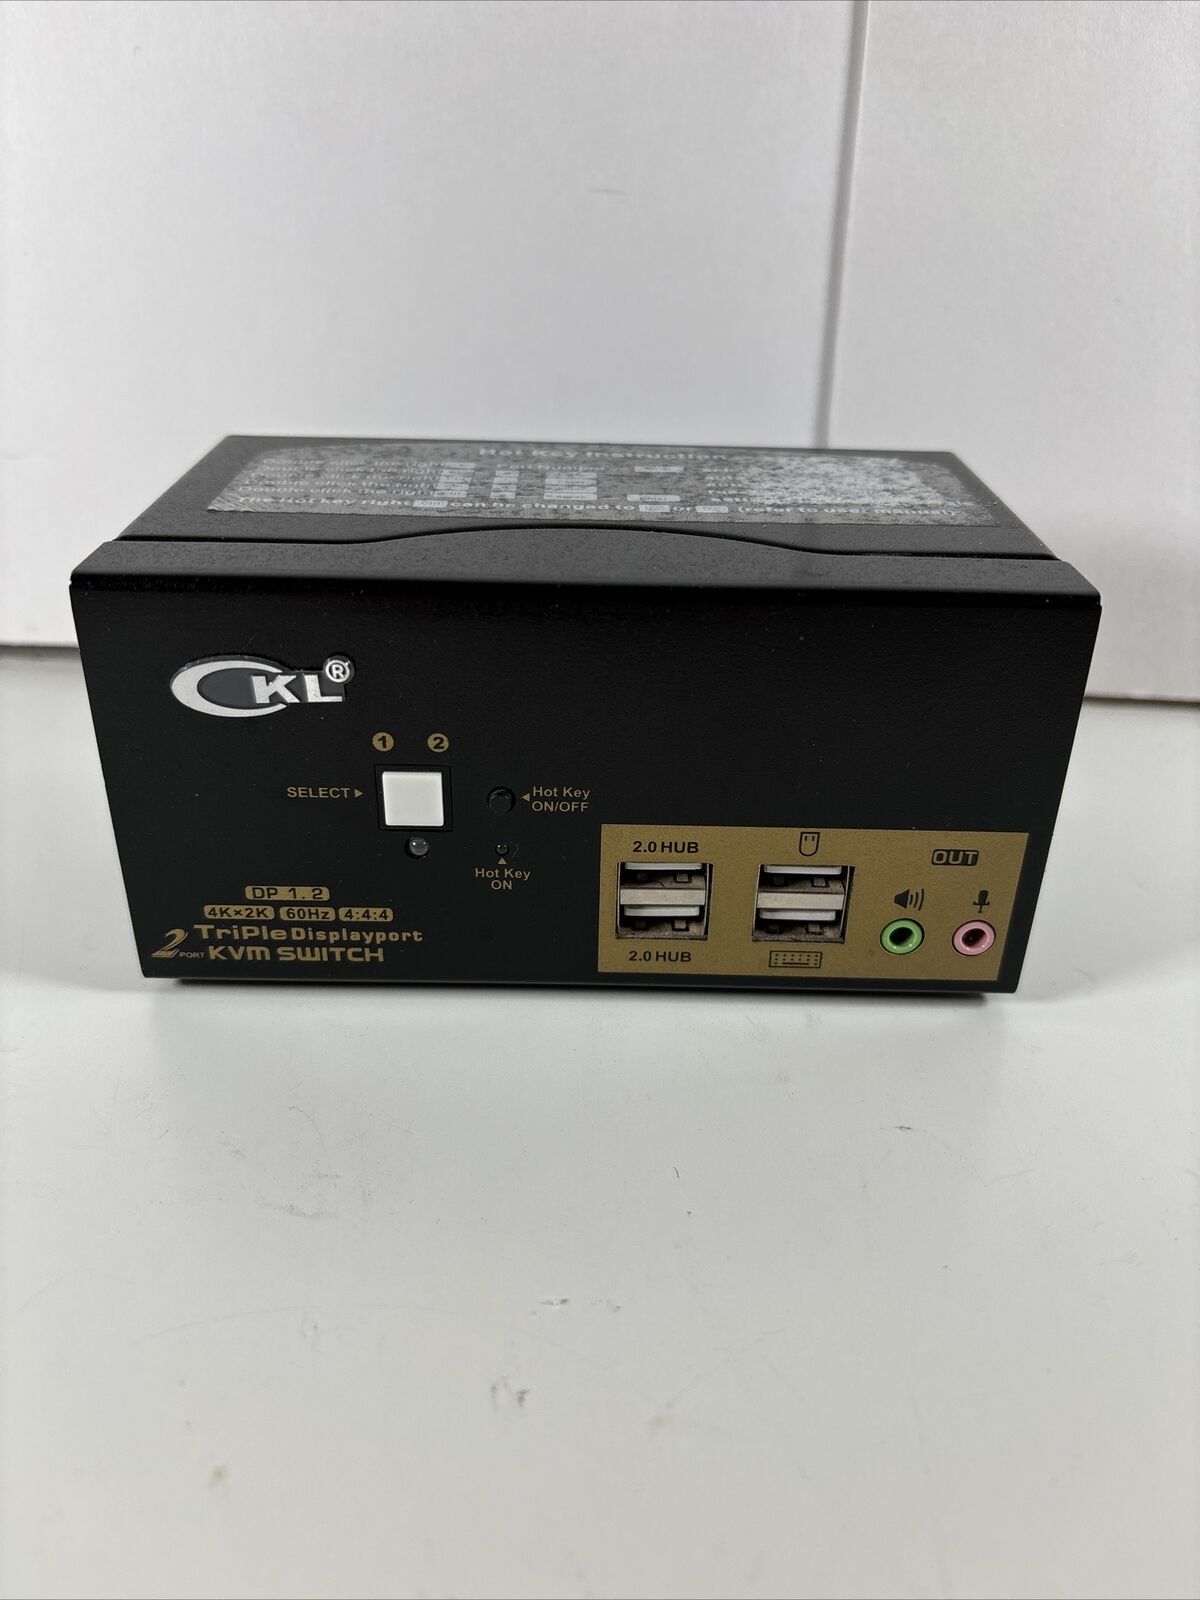 CKLau 2 Port USB 3.0 Triple Monitor KVM Switch, DP 1.4 CKL-623DP